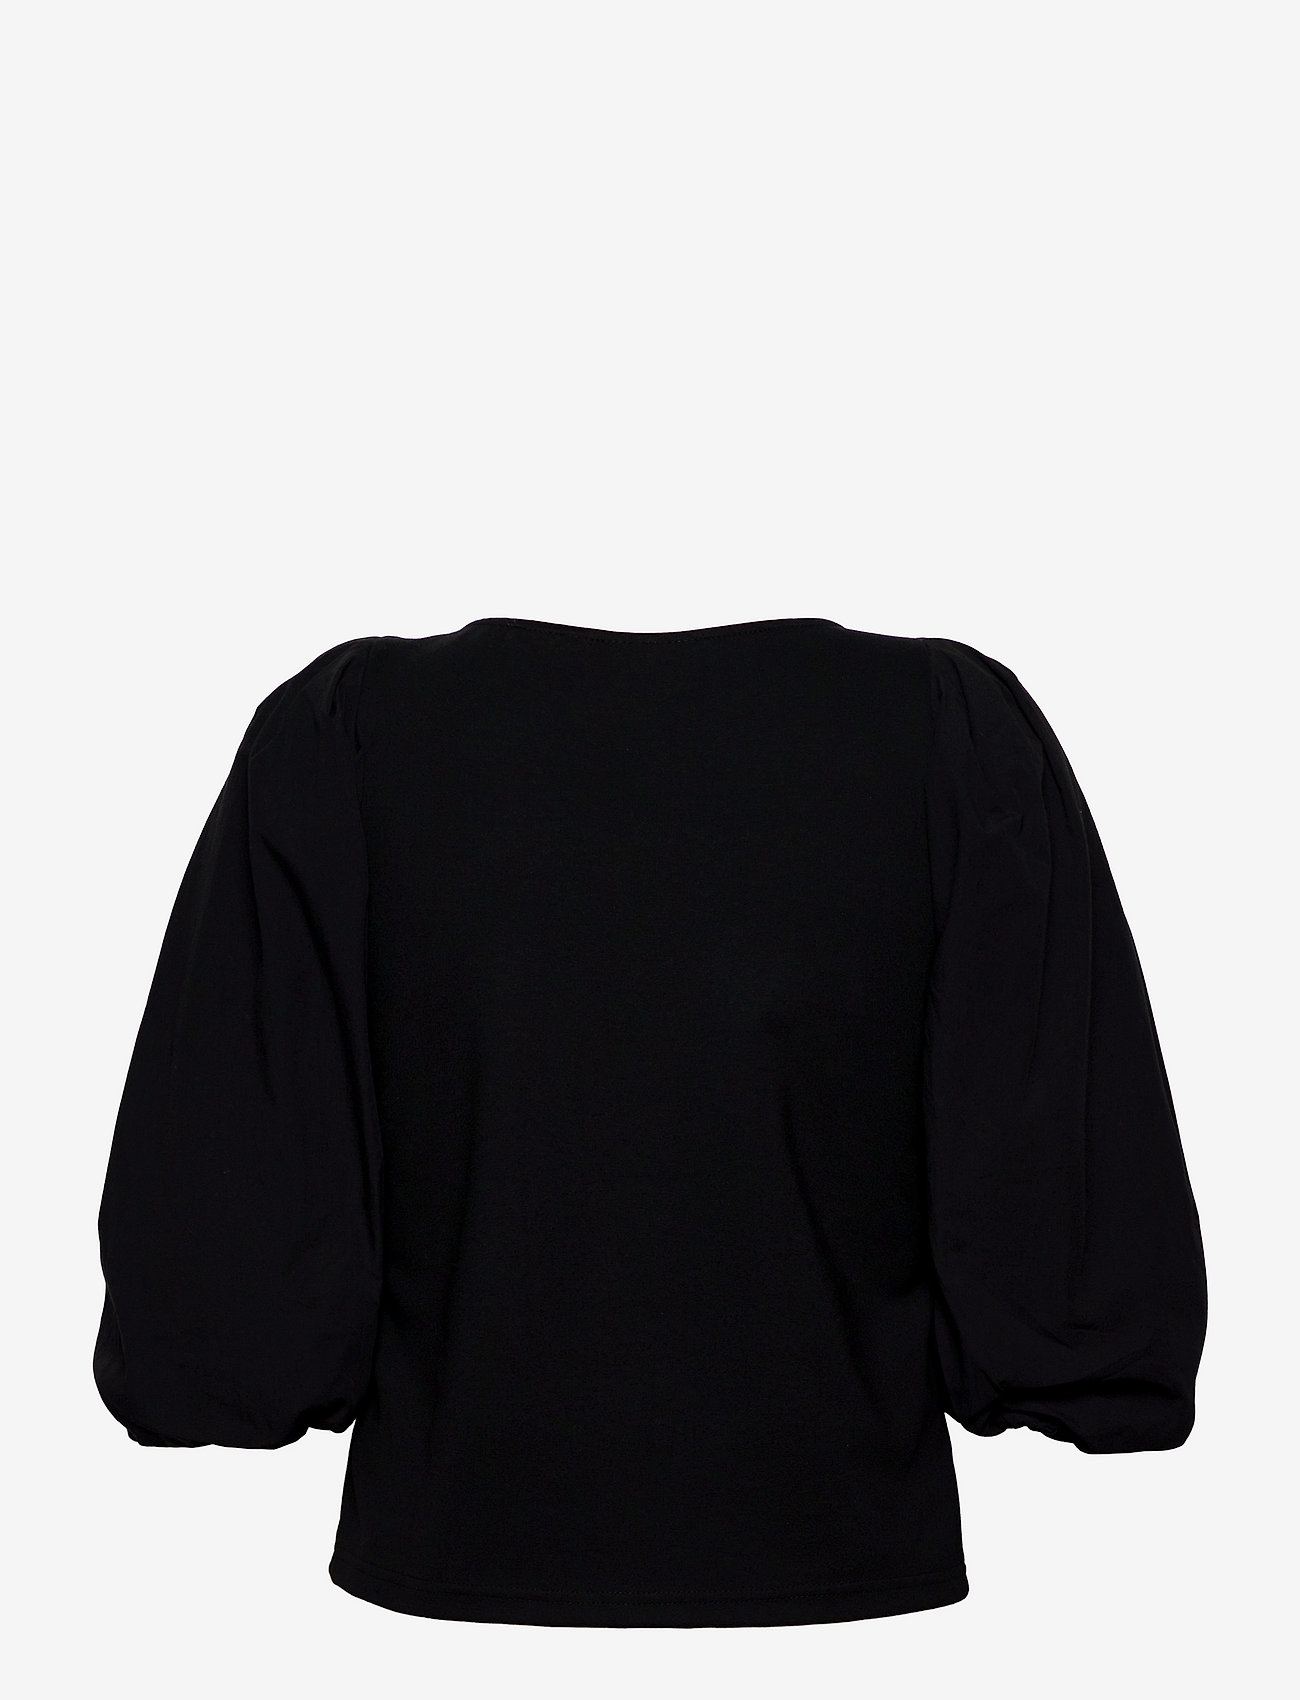 Gestuz - NemaGZ blouse - langärmlige blusen - black - 1